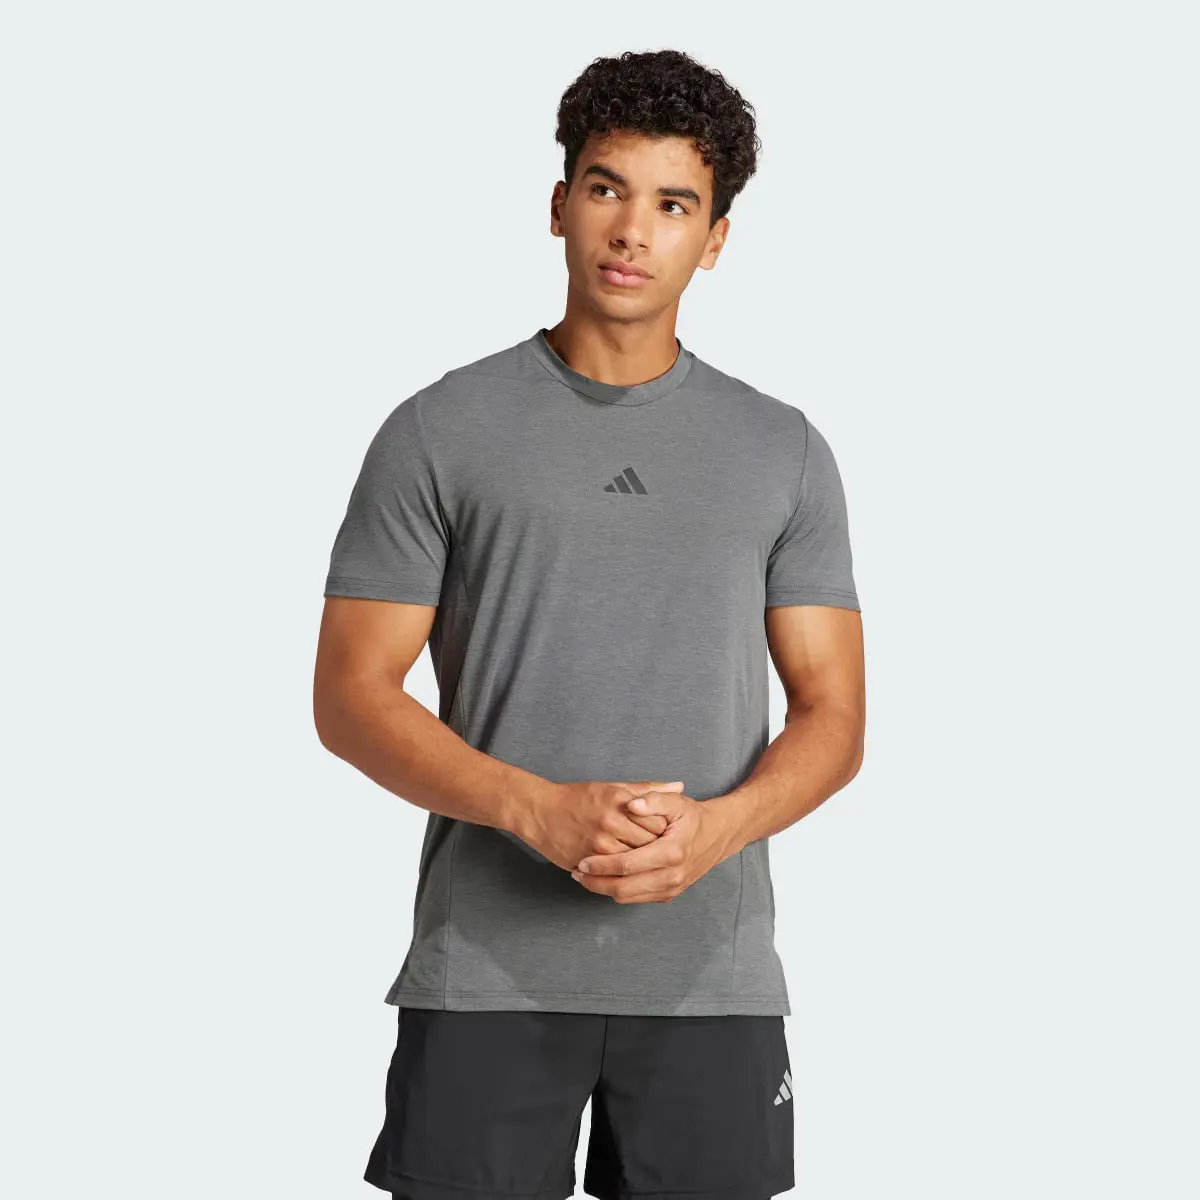 Adidas T-shirt Designed for Training Workout. 2